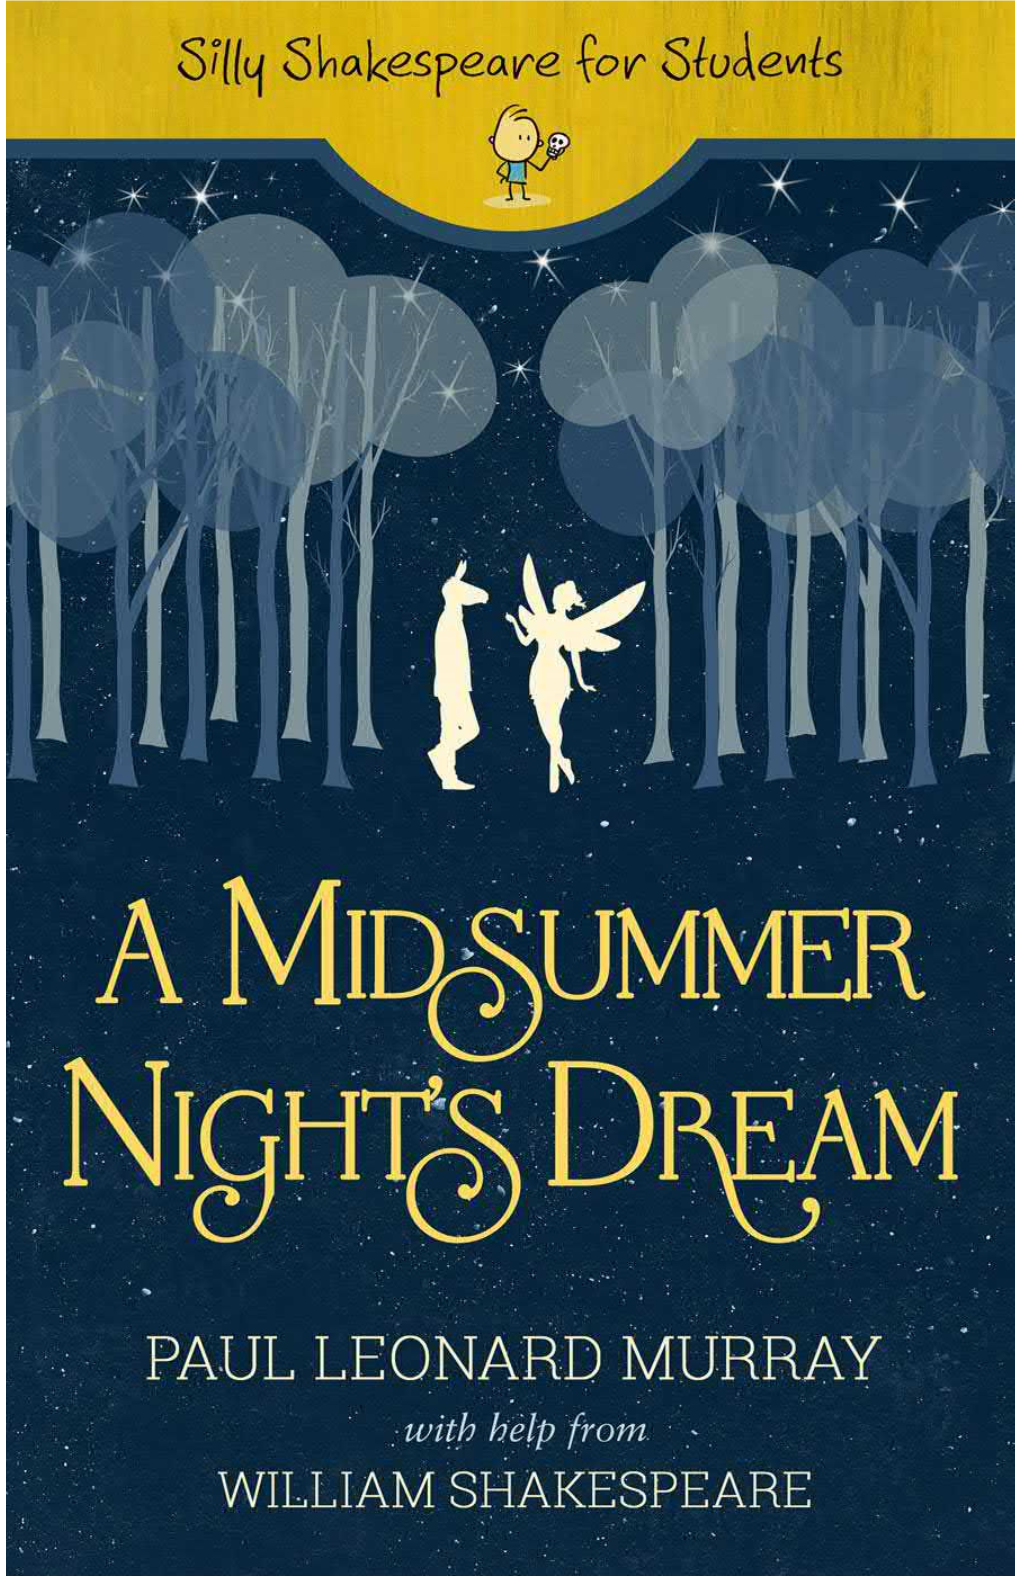 A Midsummer Night's Dream Silly Shakespeare